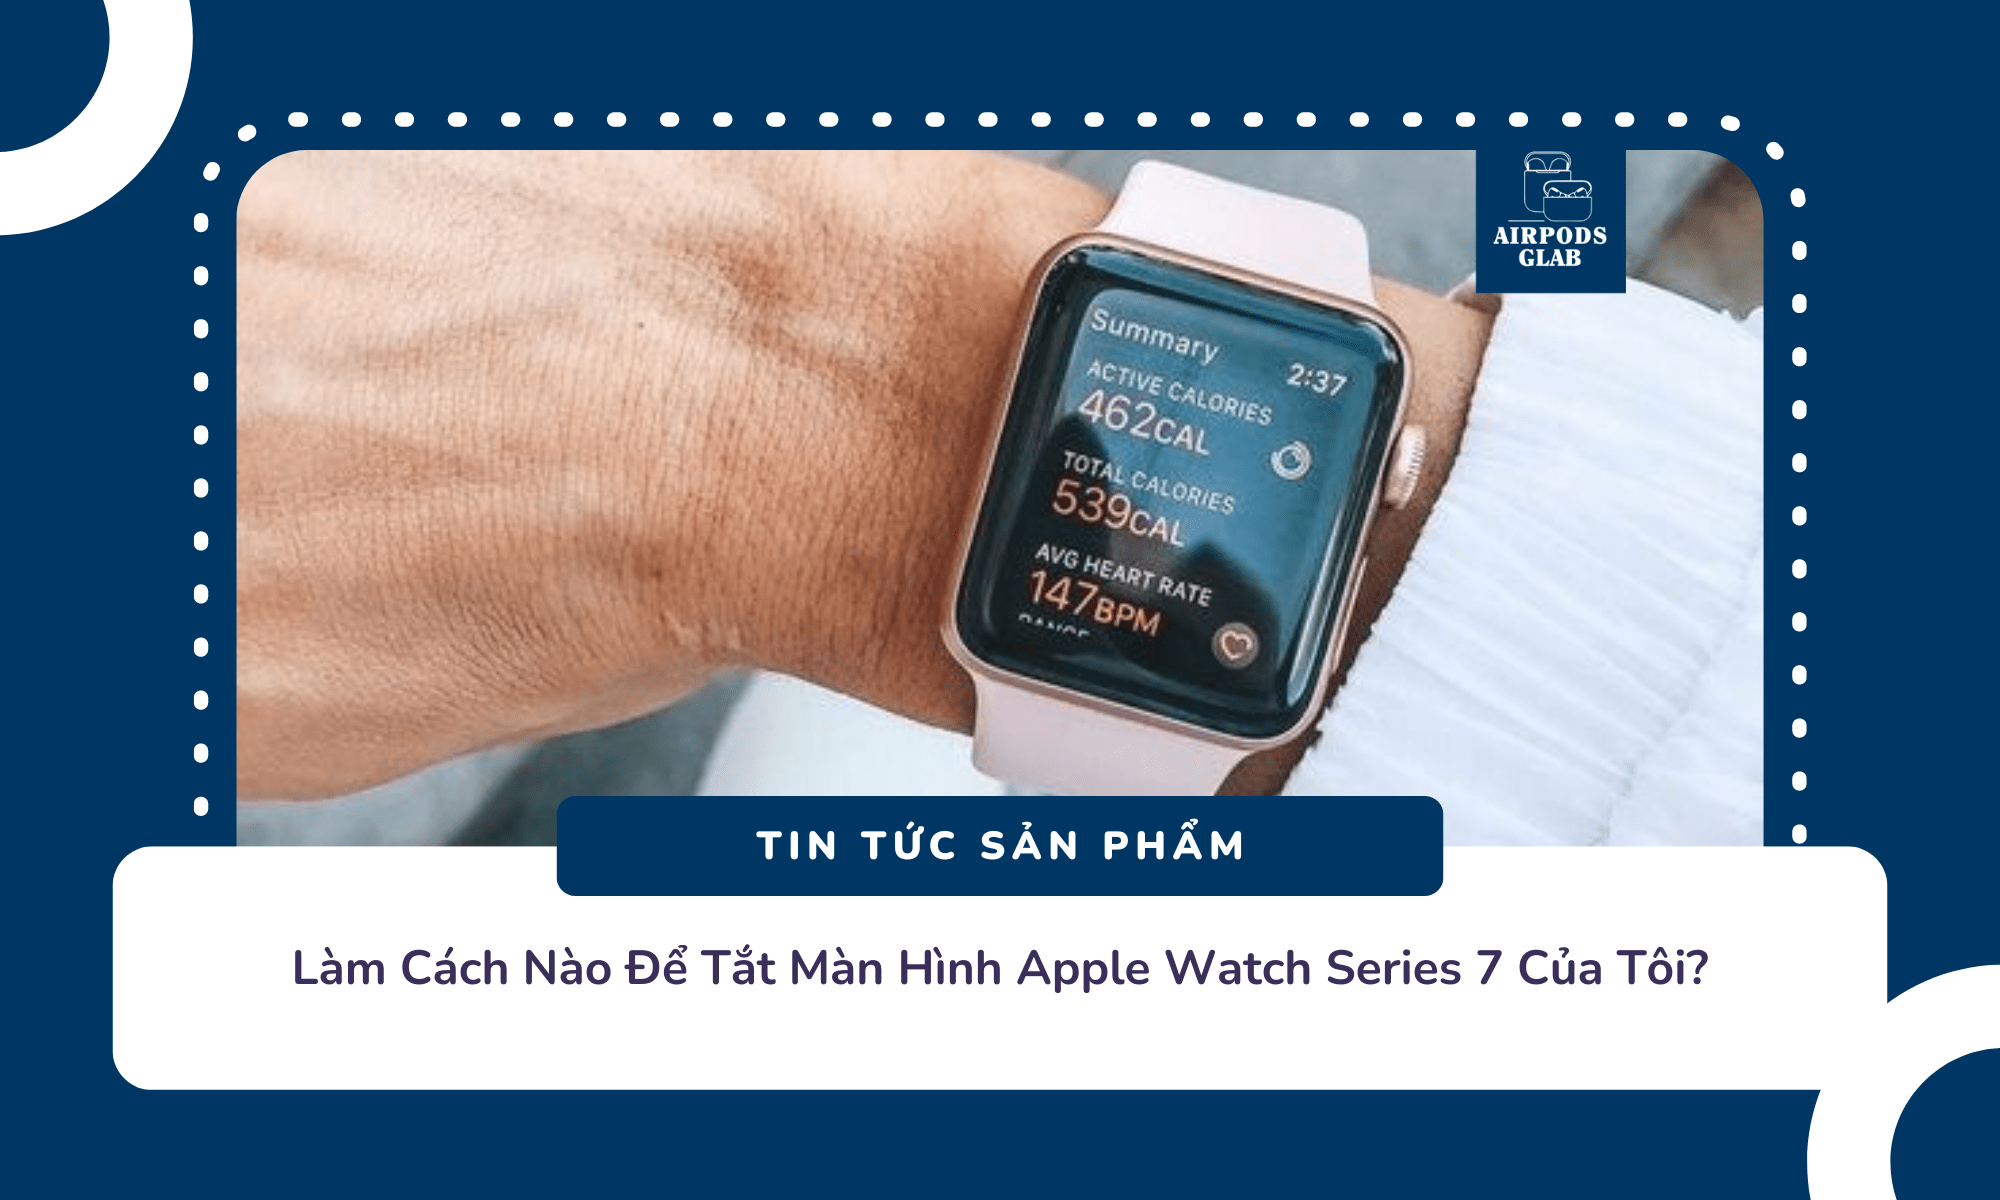 cach-tat-man-hinh-apple-watch-series-7